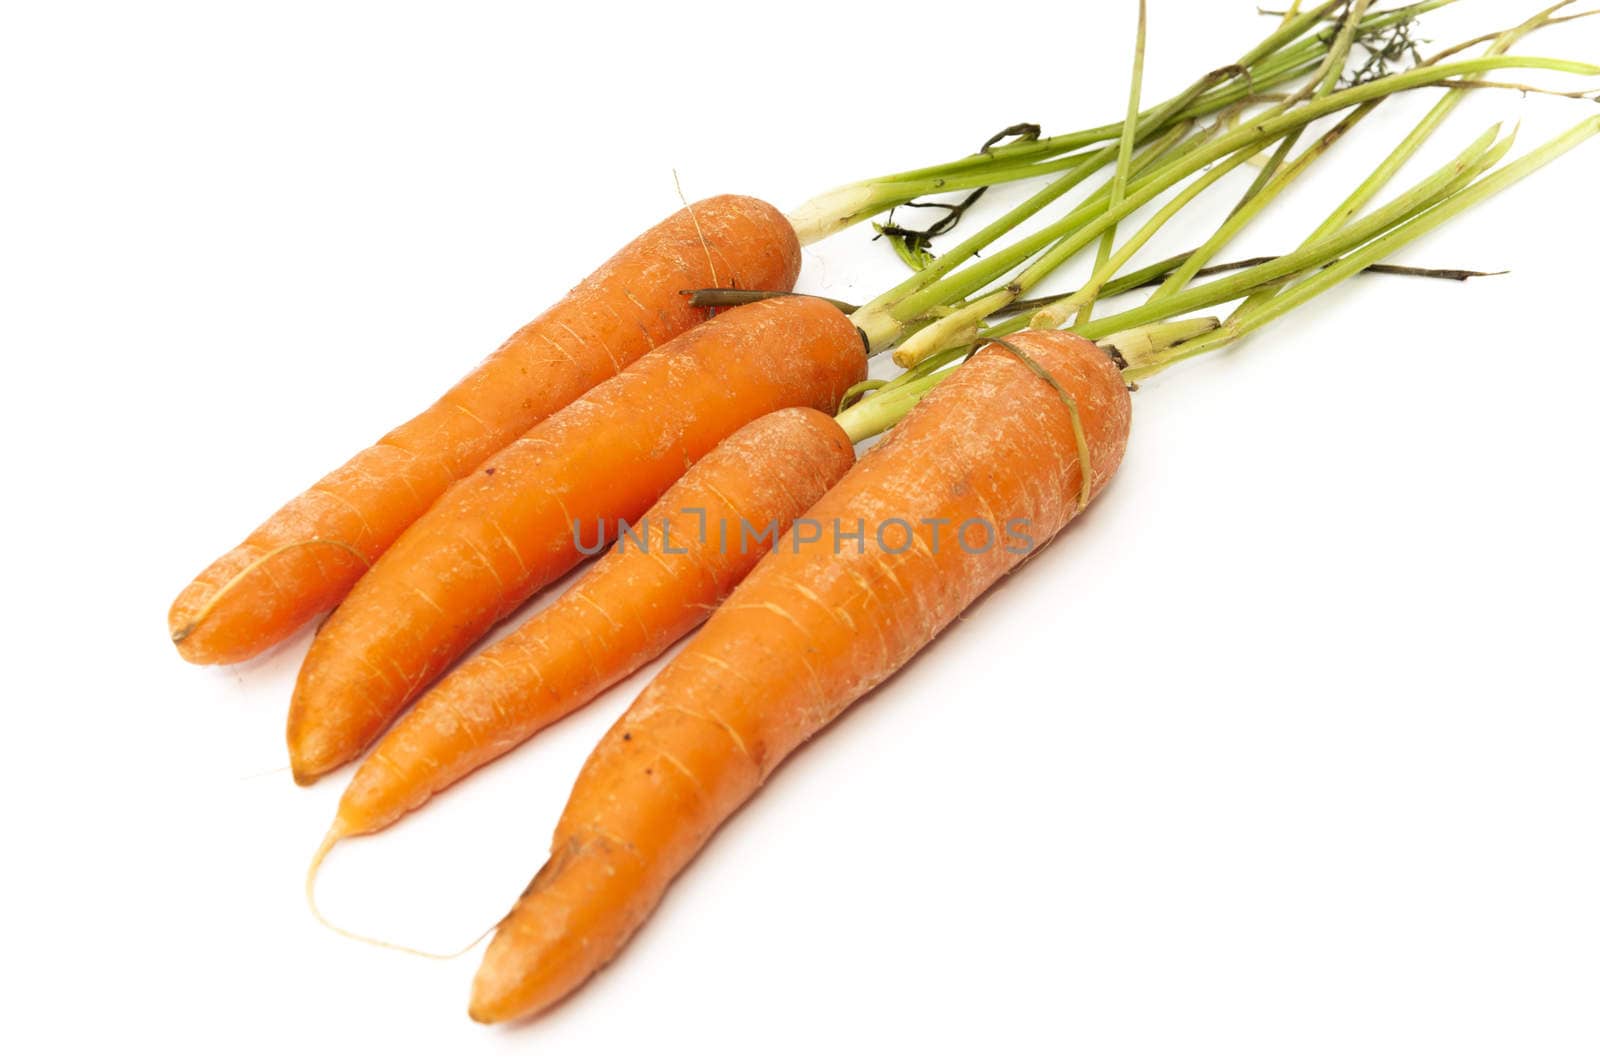 bunch of carrots by arnau2098